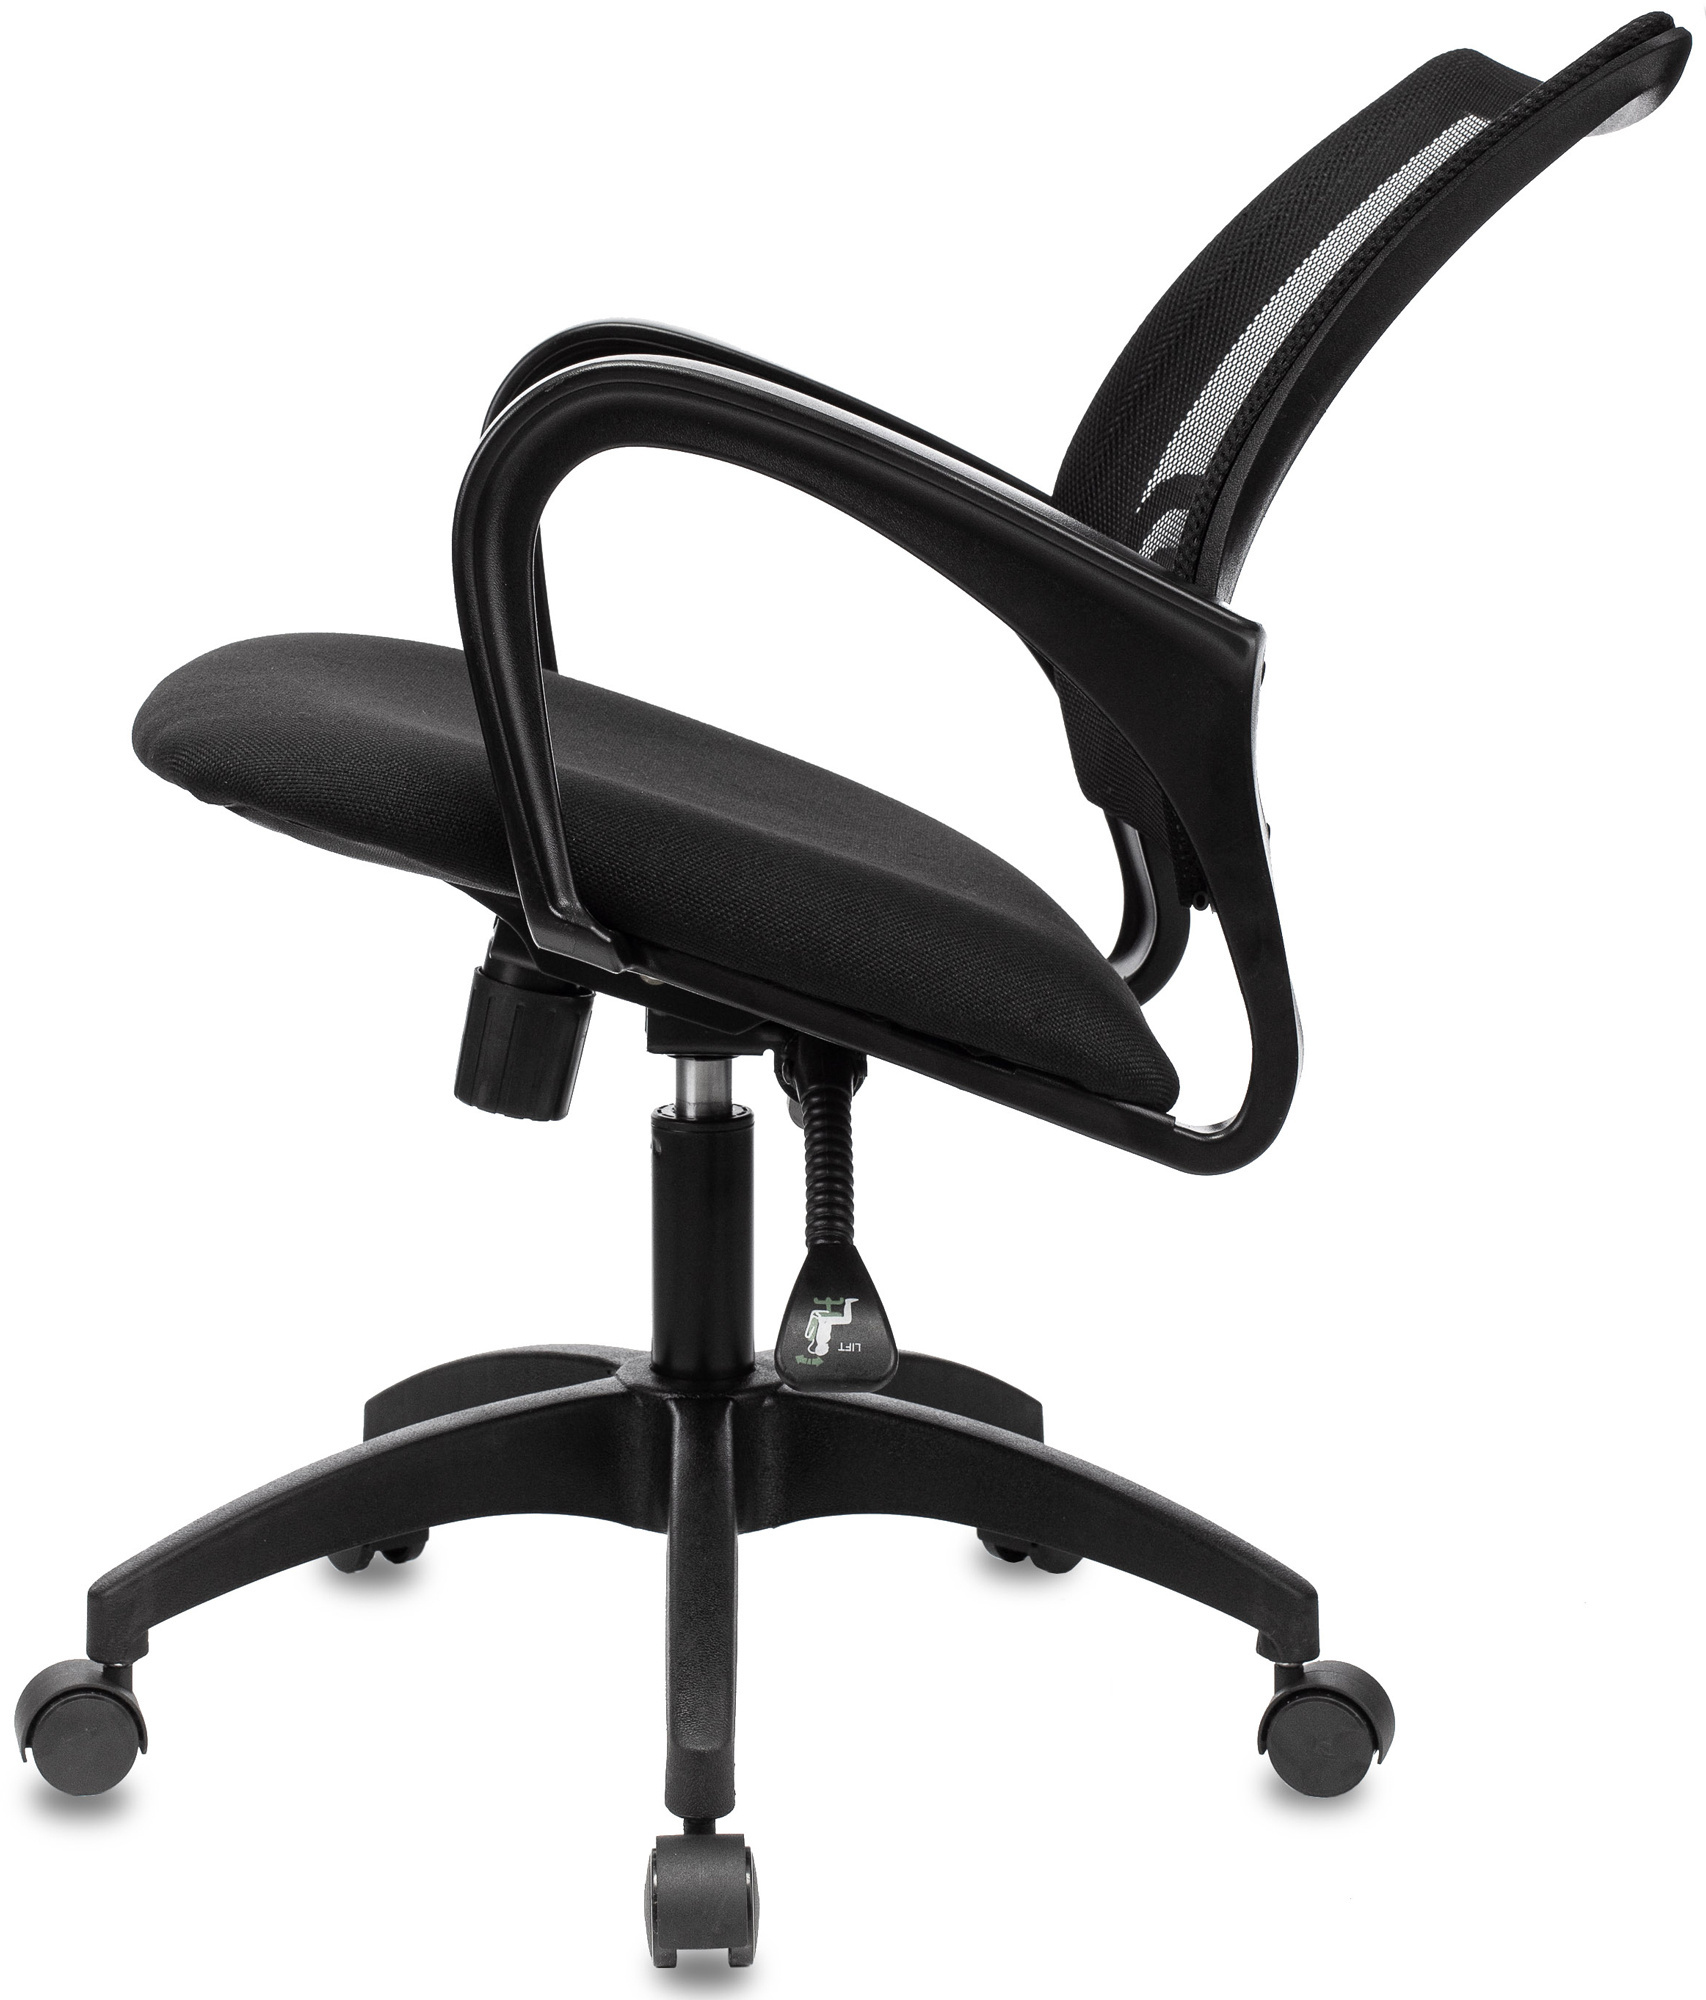 Кресло ch 695n. Ch-695n, на колесиках, сетка/ткань, черный [Ch-695n/Black]. Офисное кресло Люкс.